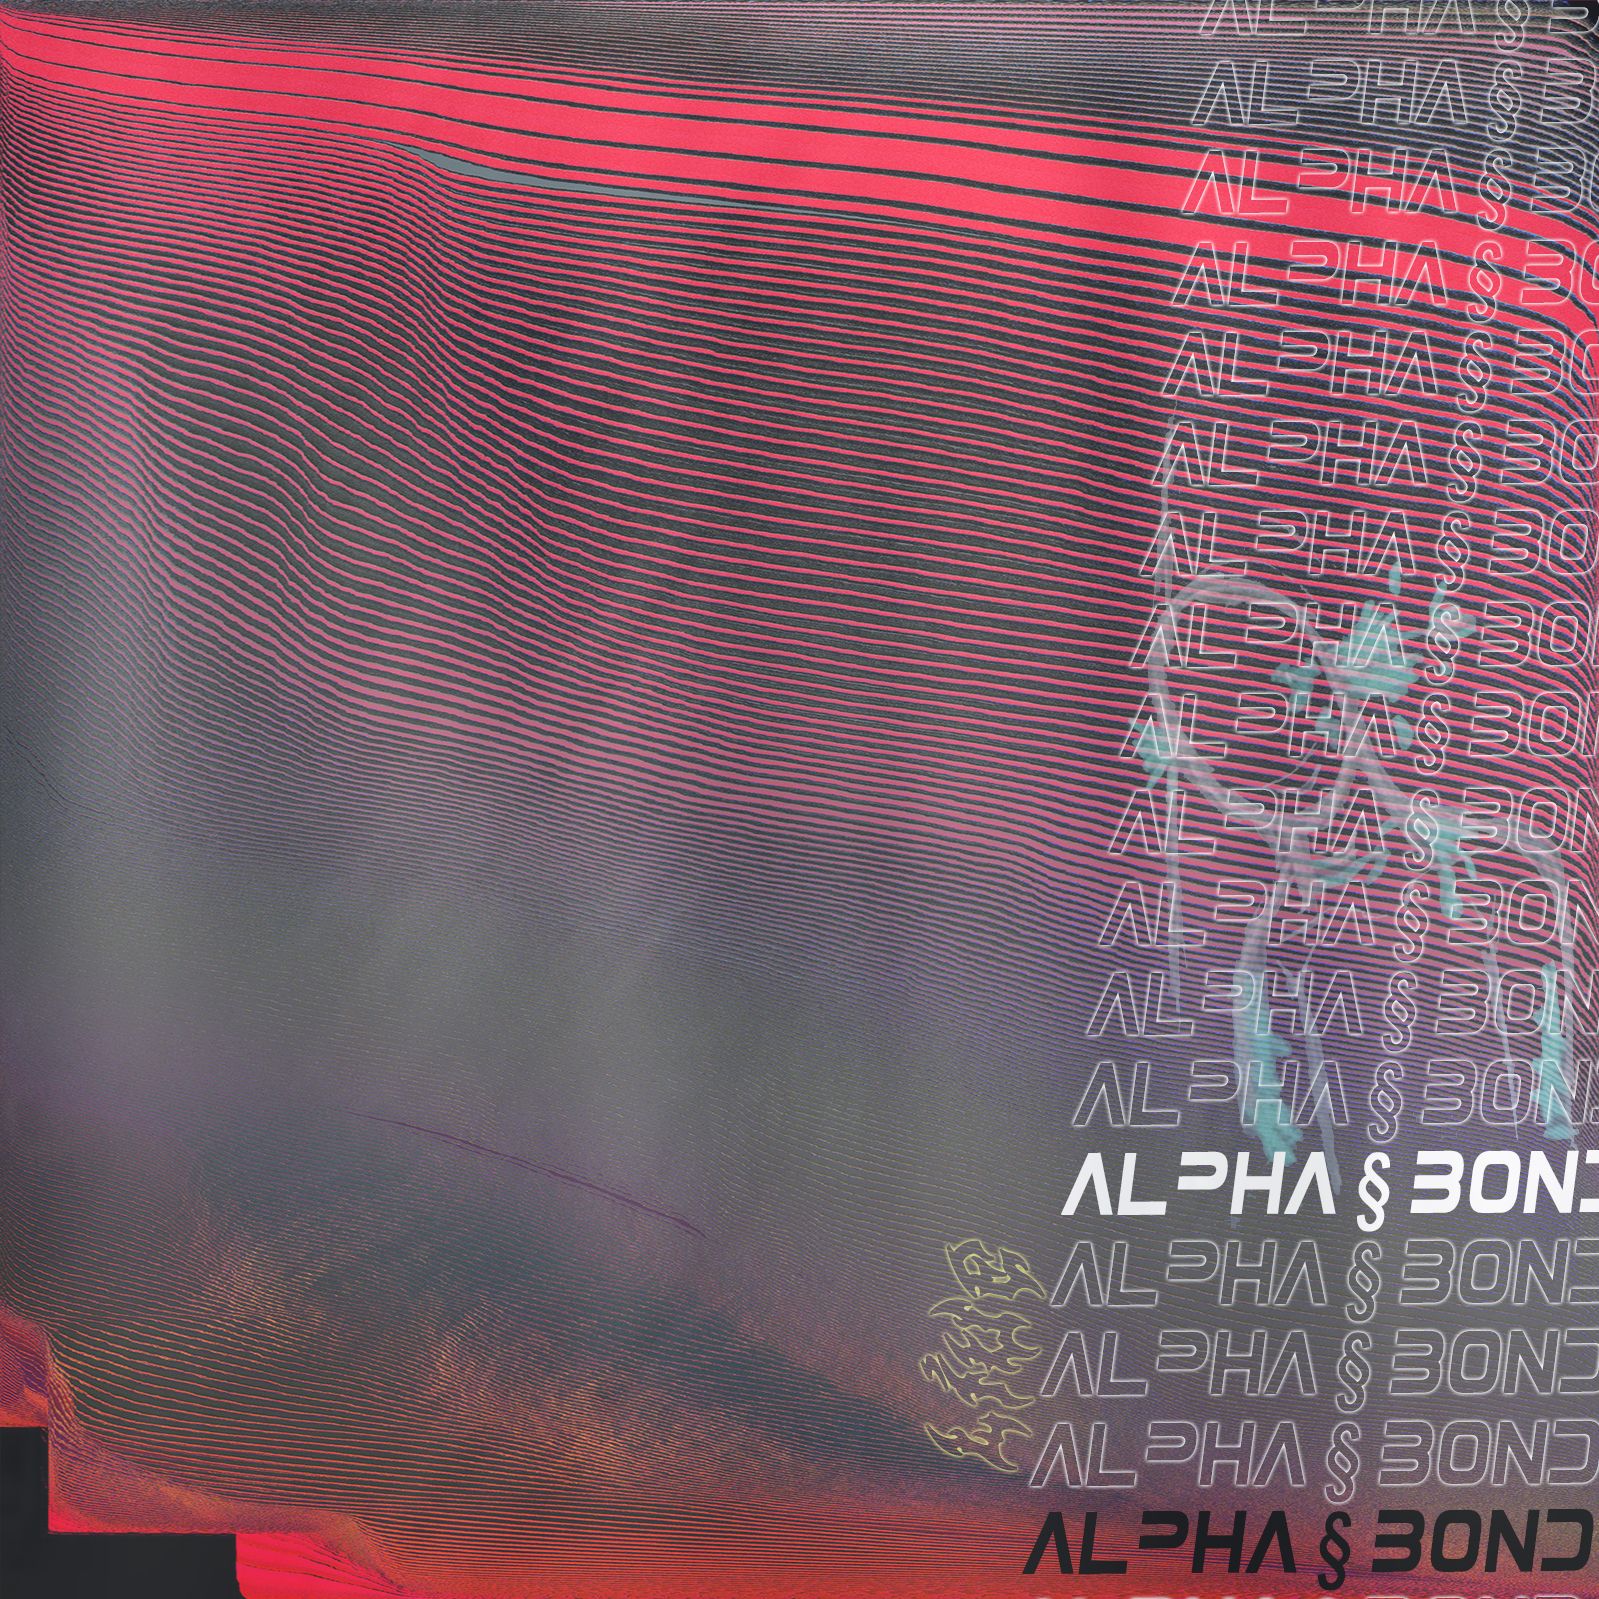 Eroflueden alpha § bond